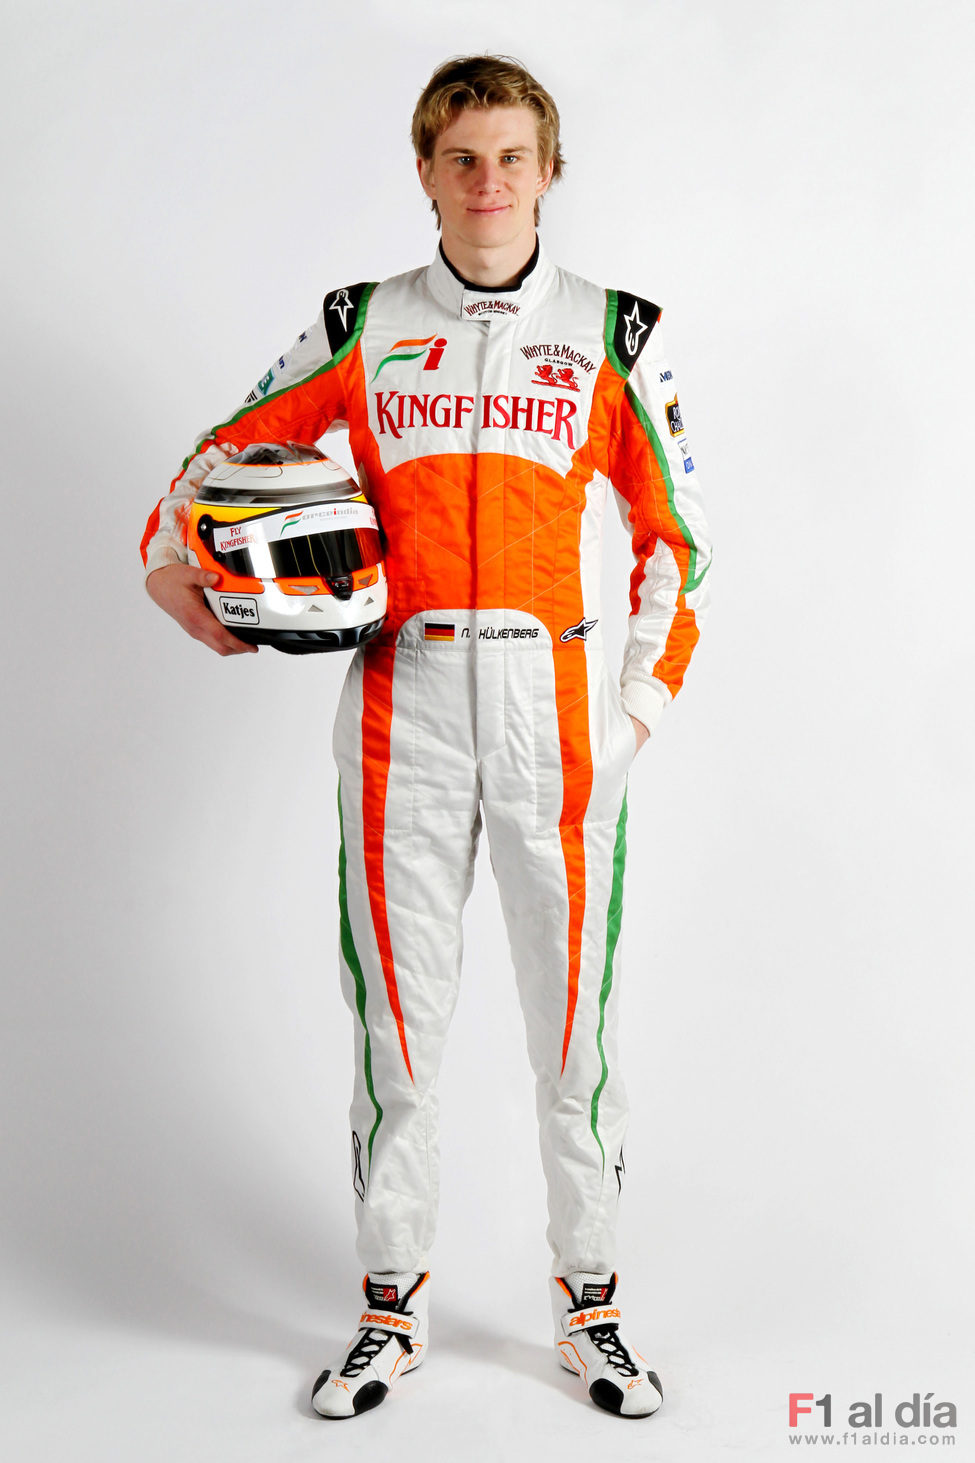 Nico Hülkenberg, piloto probador de Force India para 2011